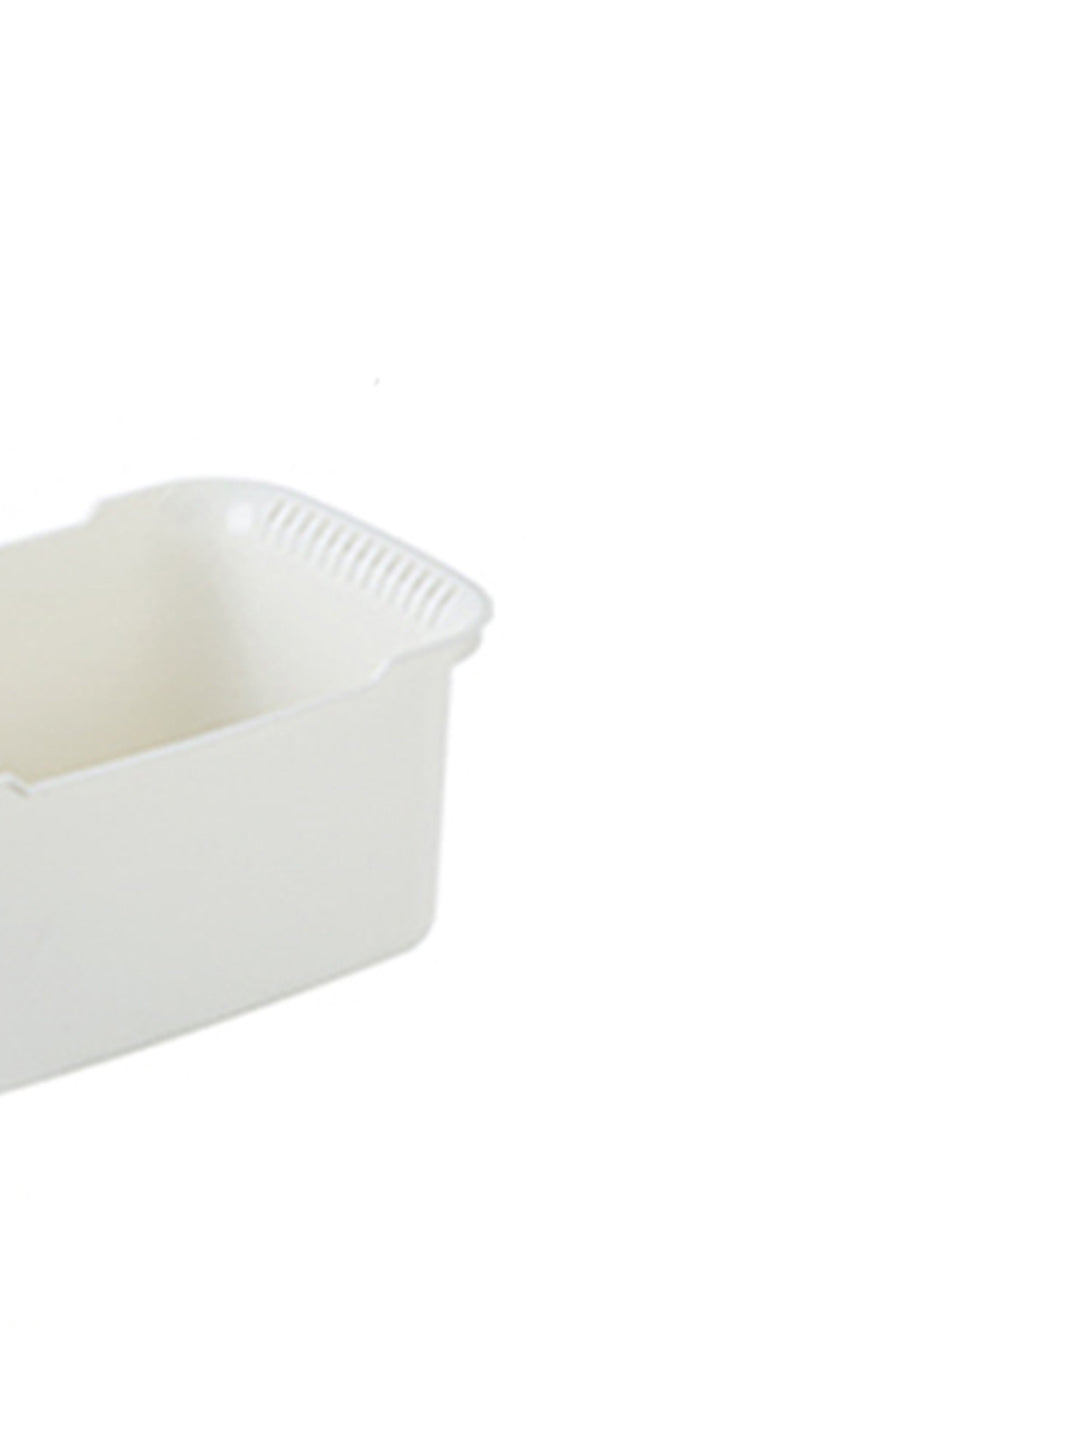 VON CASA Multicolorpurpose Portable Storage Basket - Off White